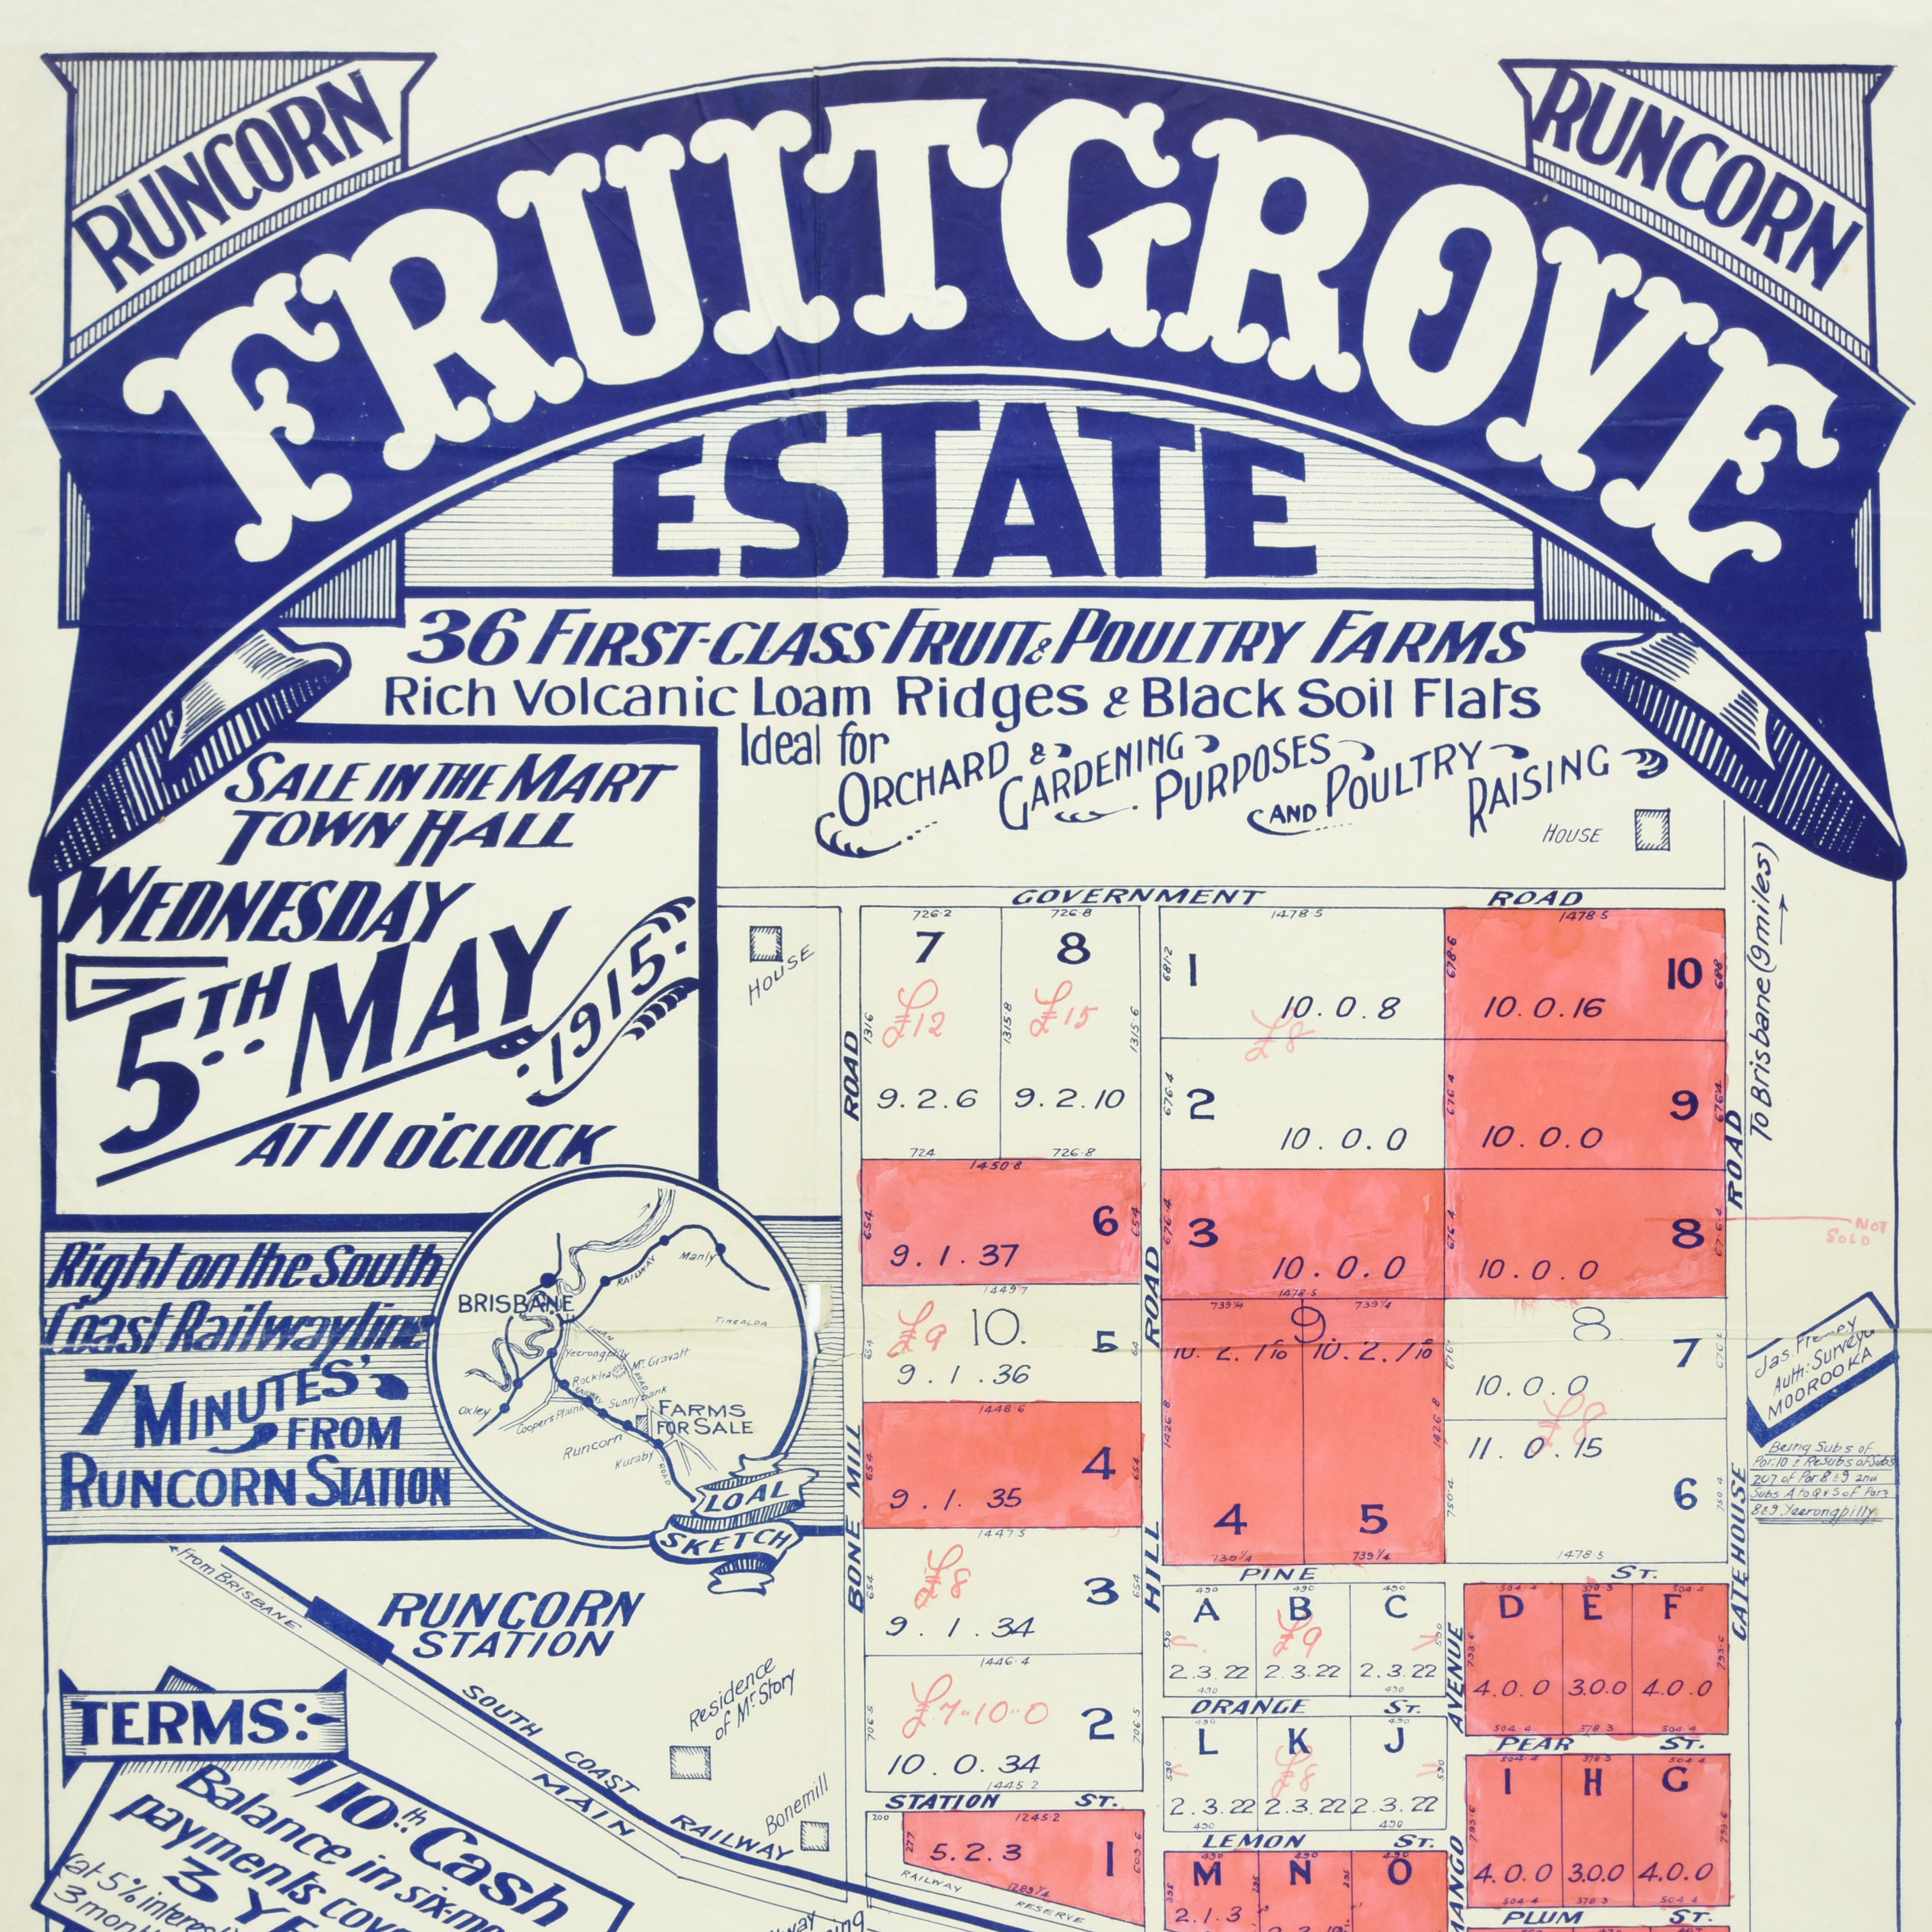 1915 Runcorn - Fruitgrove Estate